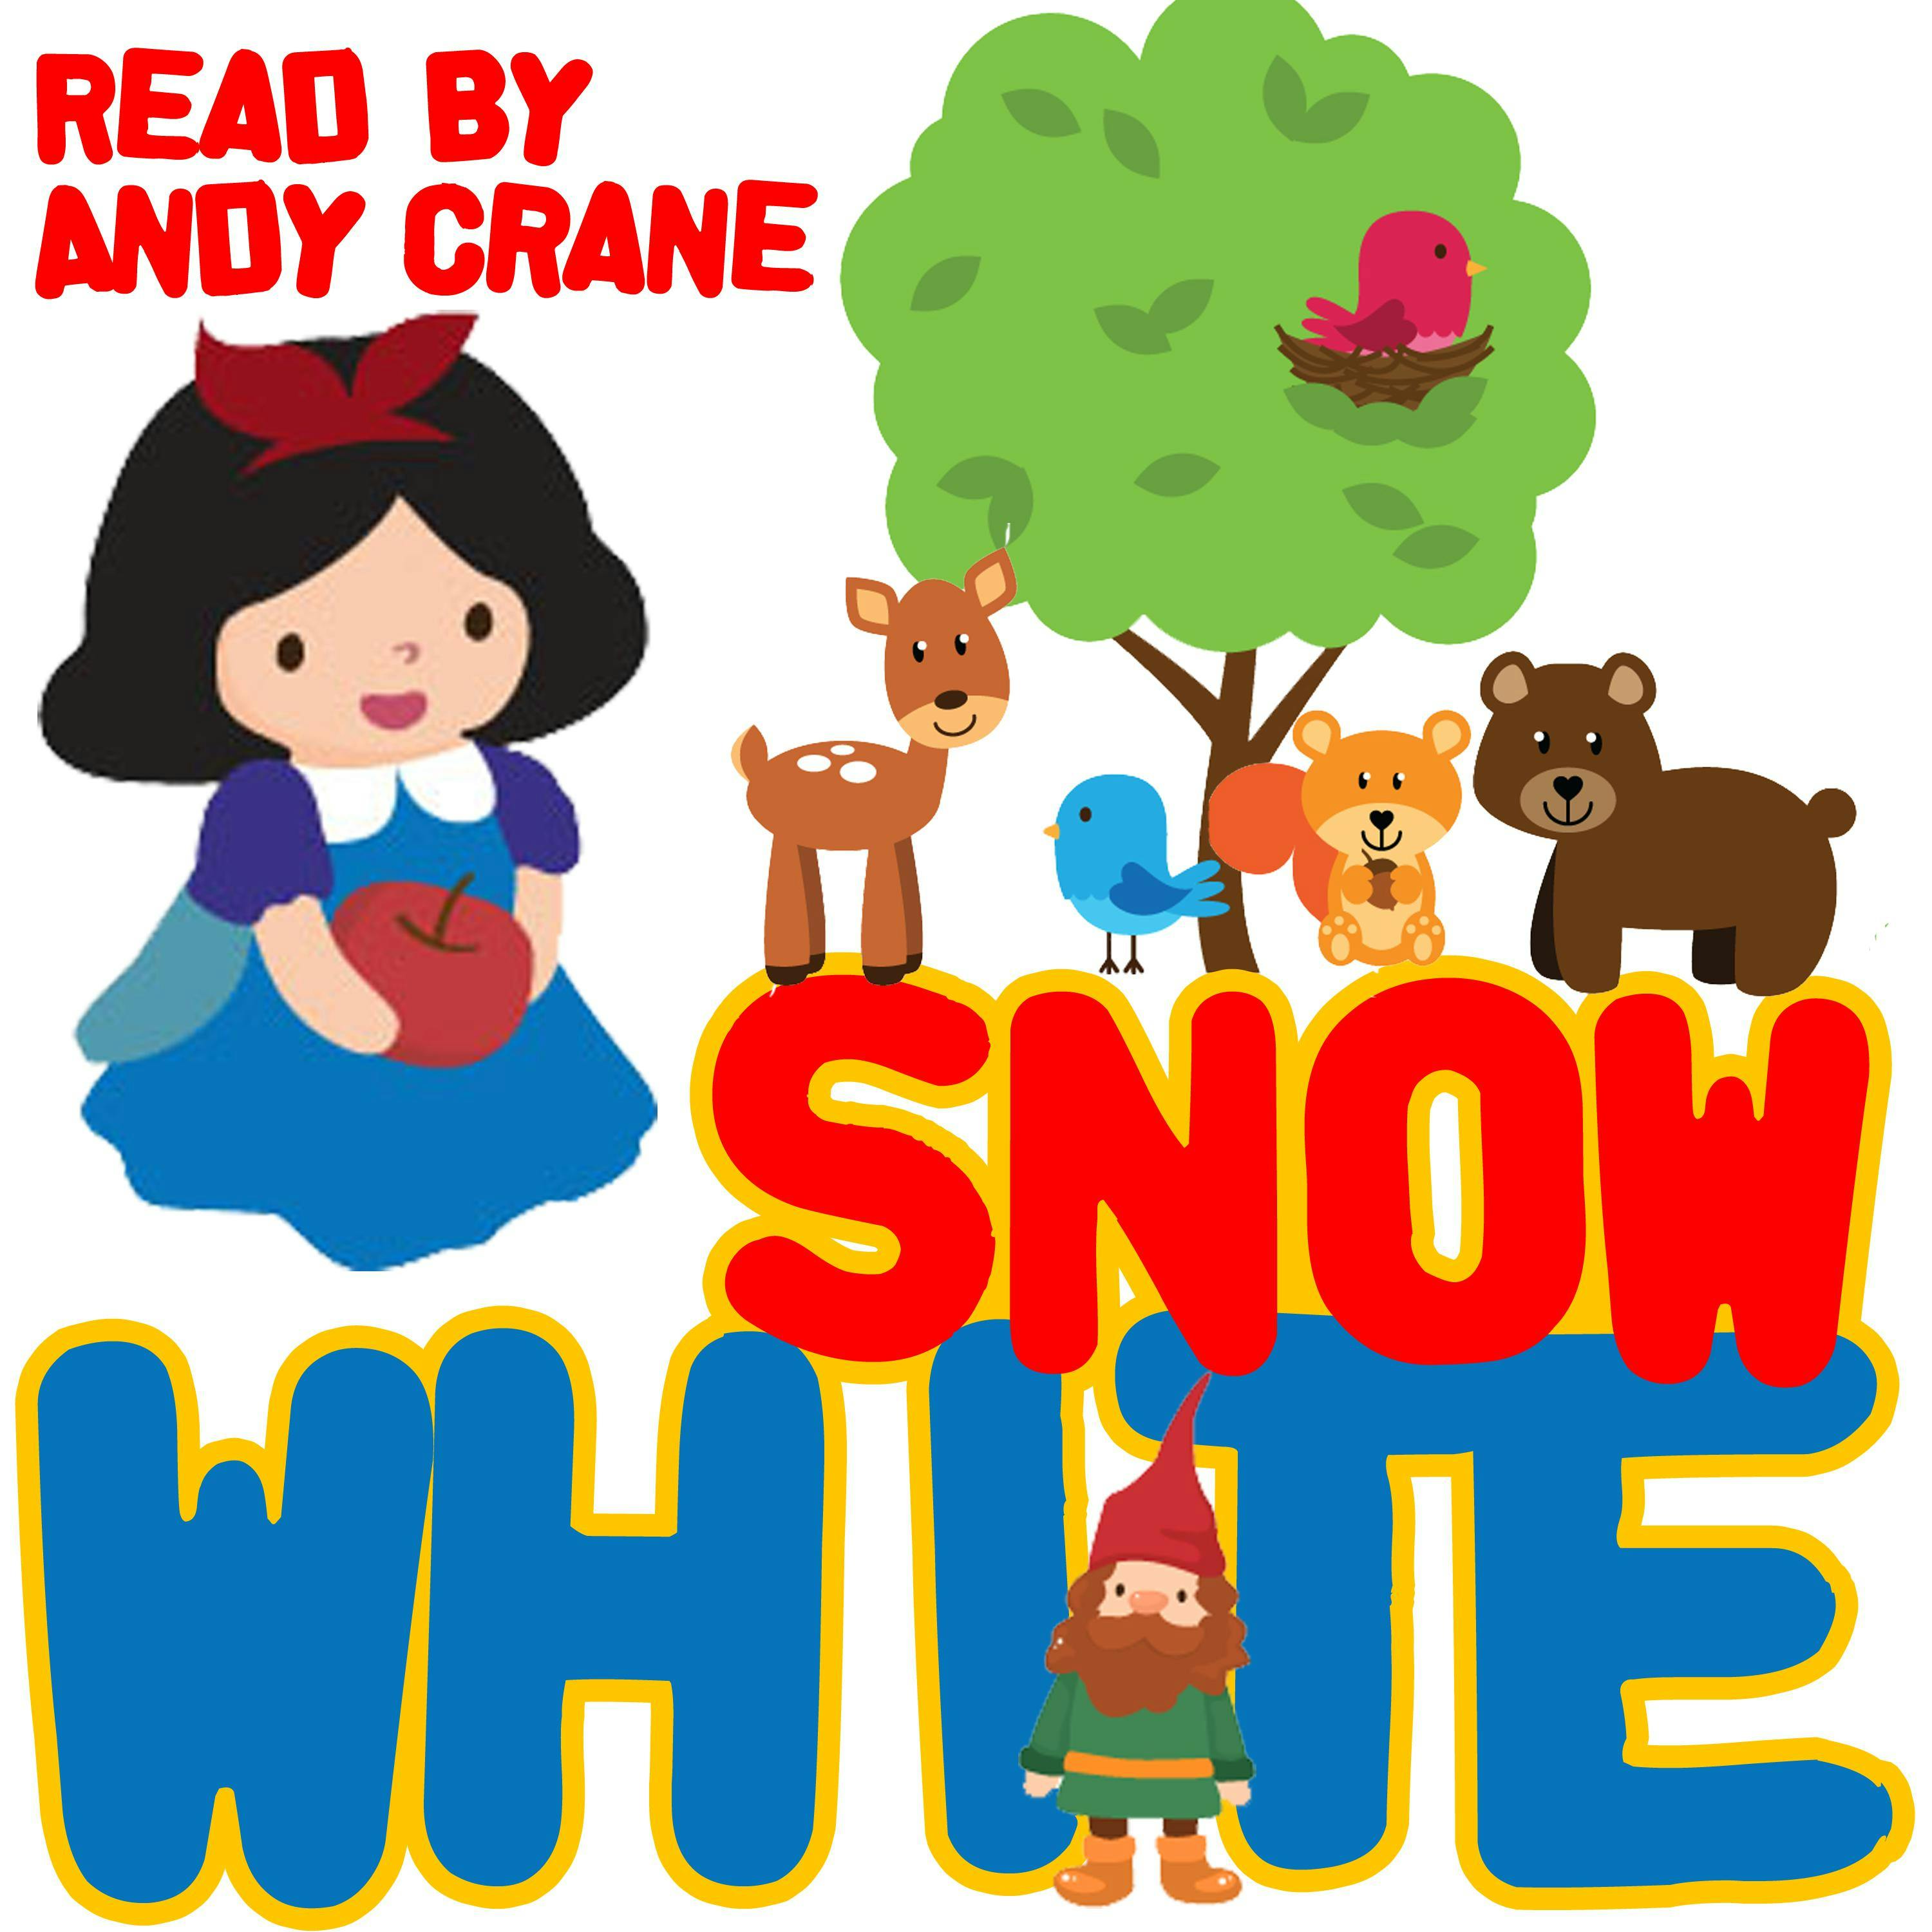 Snow White - undefined